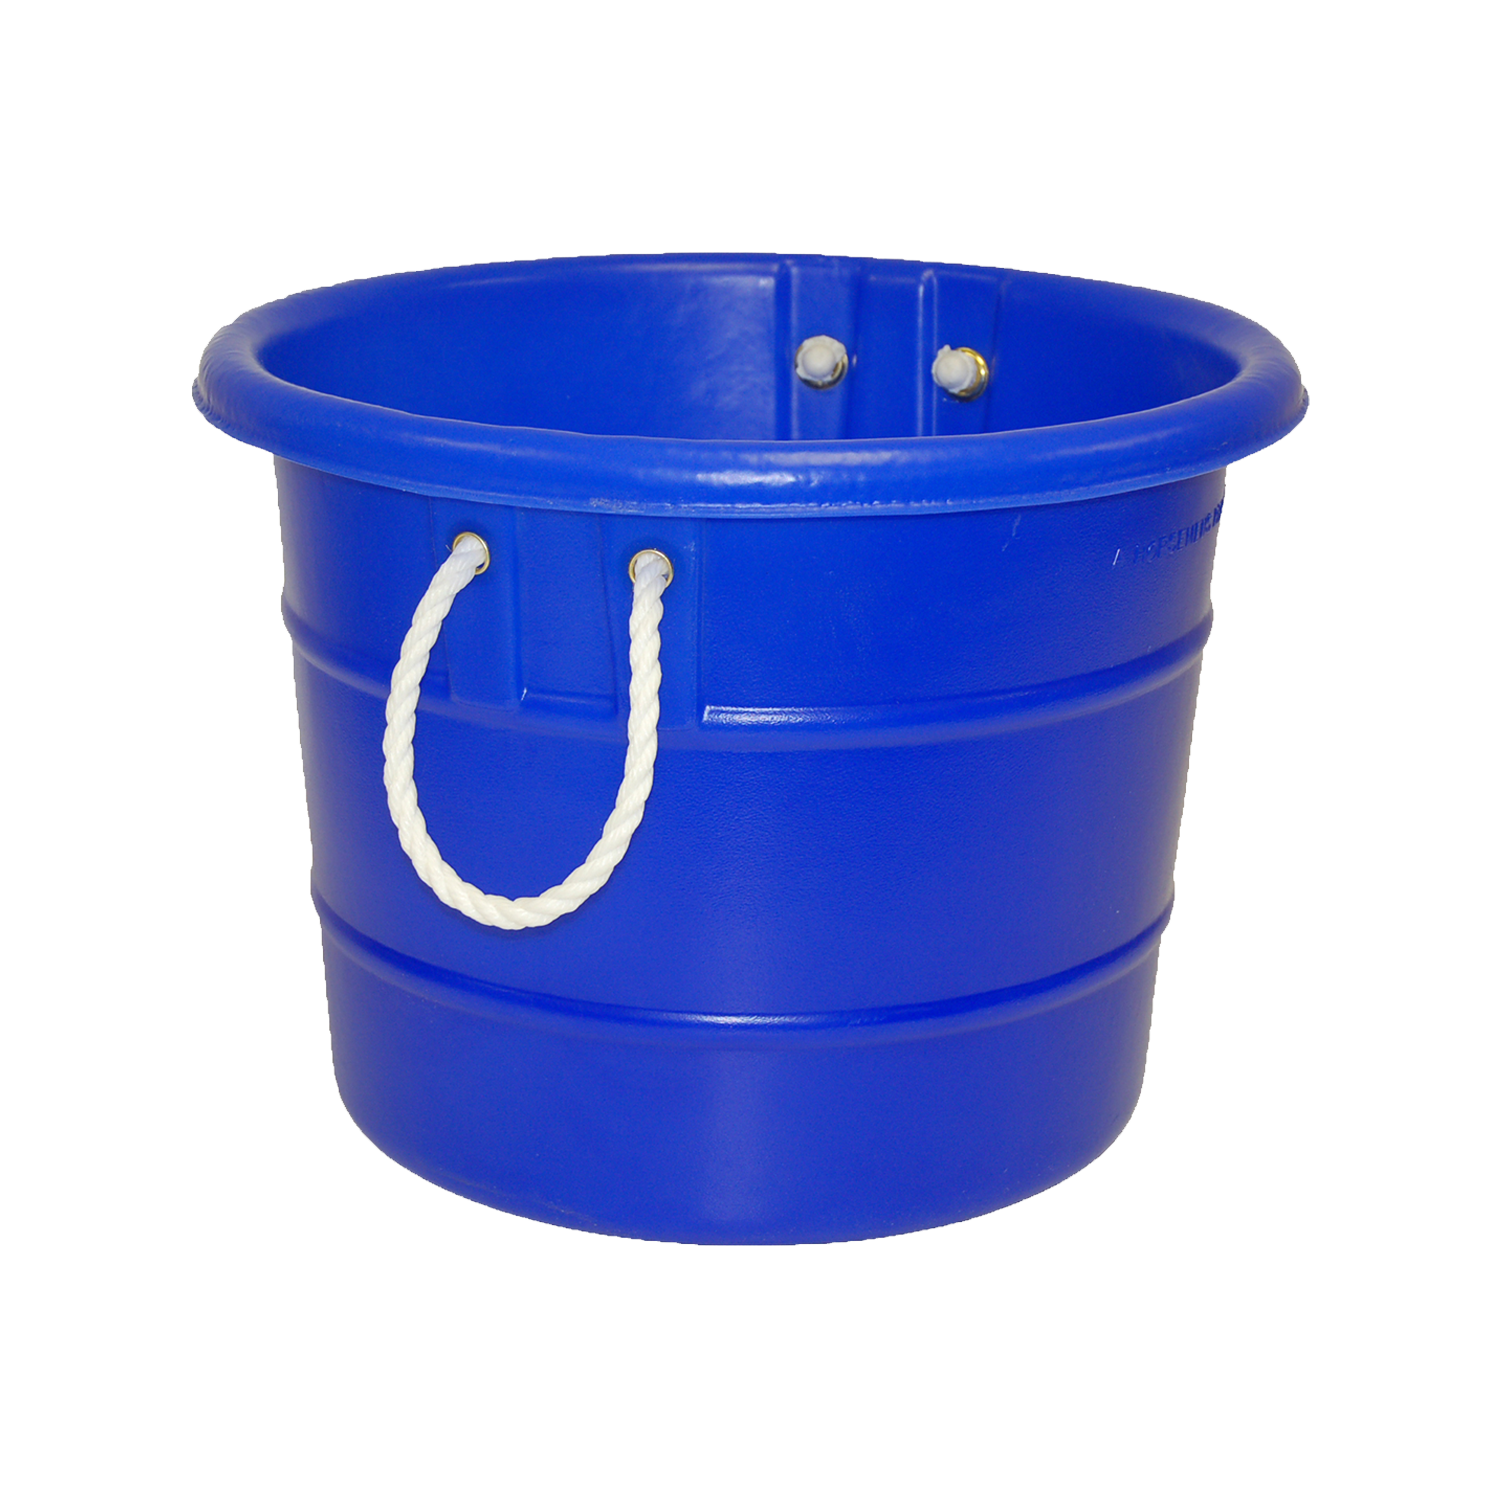 Horsemens Pride Manure Bucket, Royal Blue